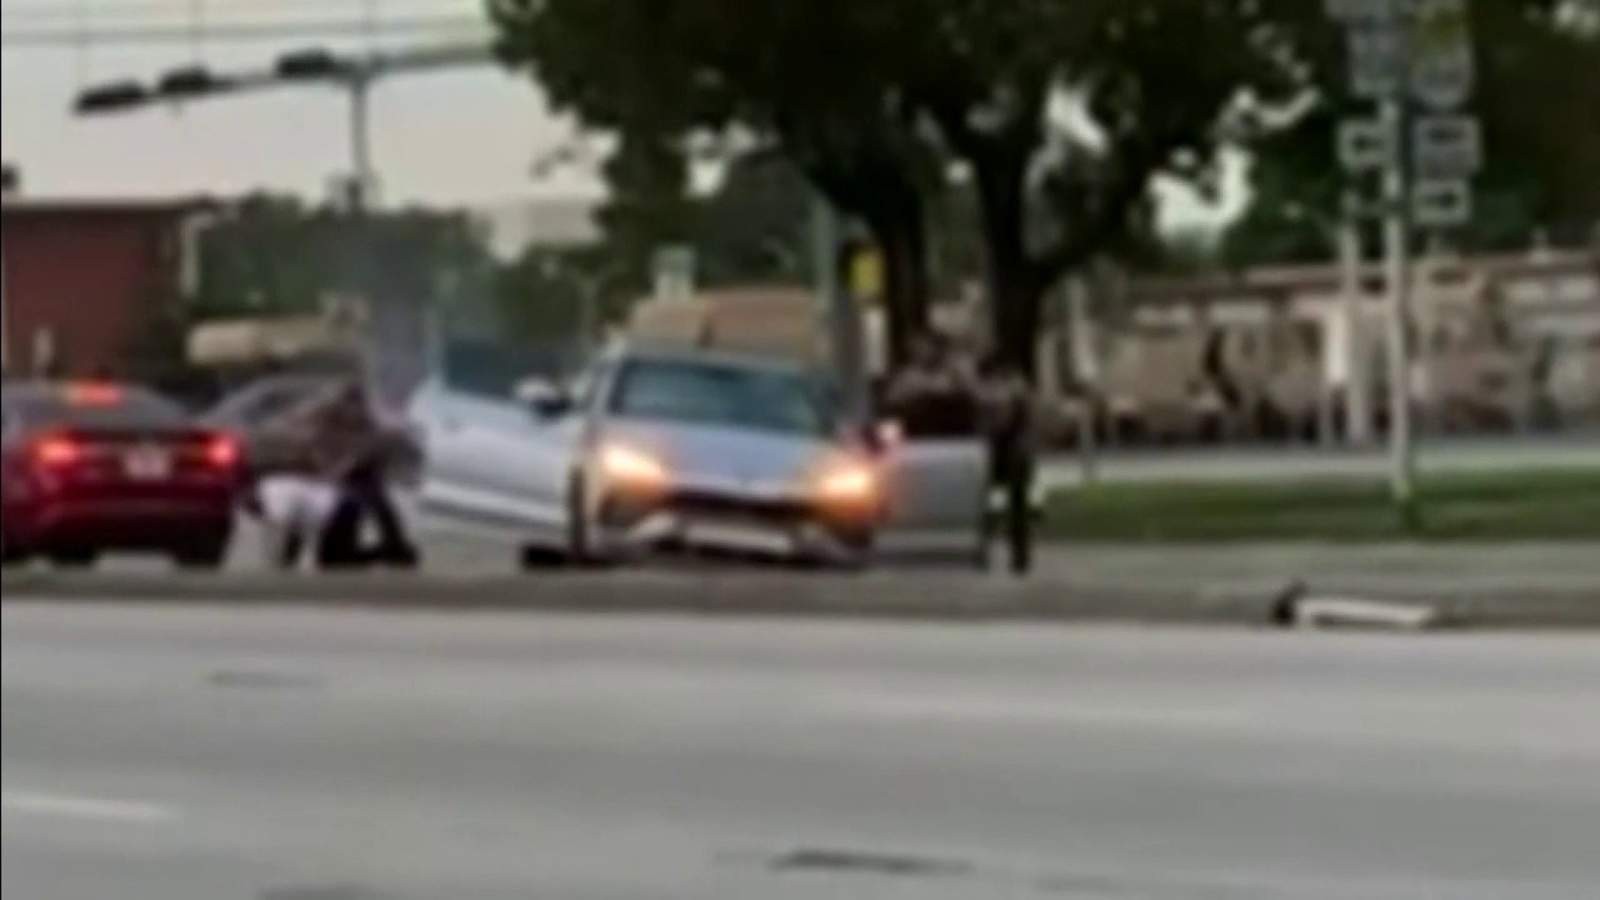 Lamborghini SUV crashes in Northwest Miami Dade after hitting pedestrian several blocks away